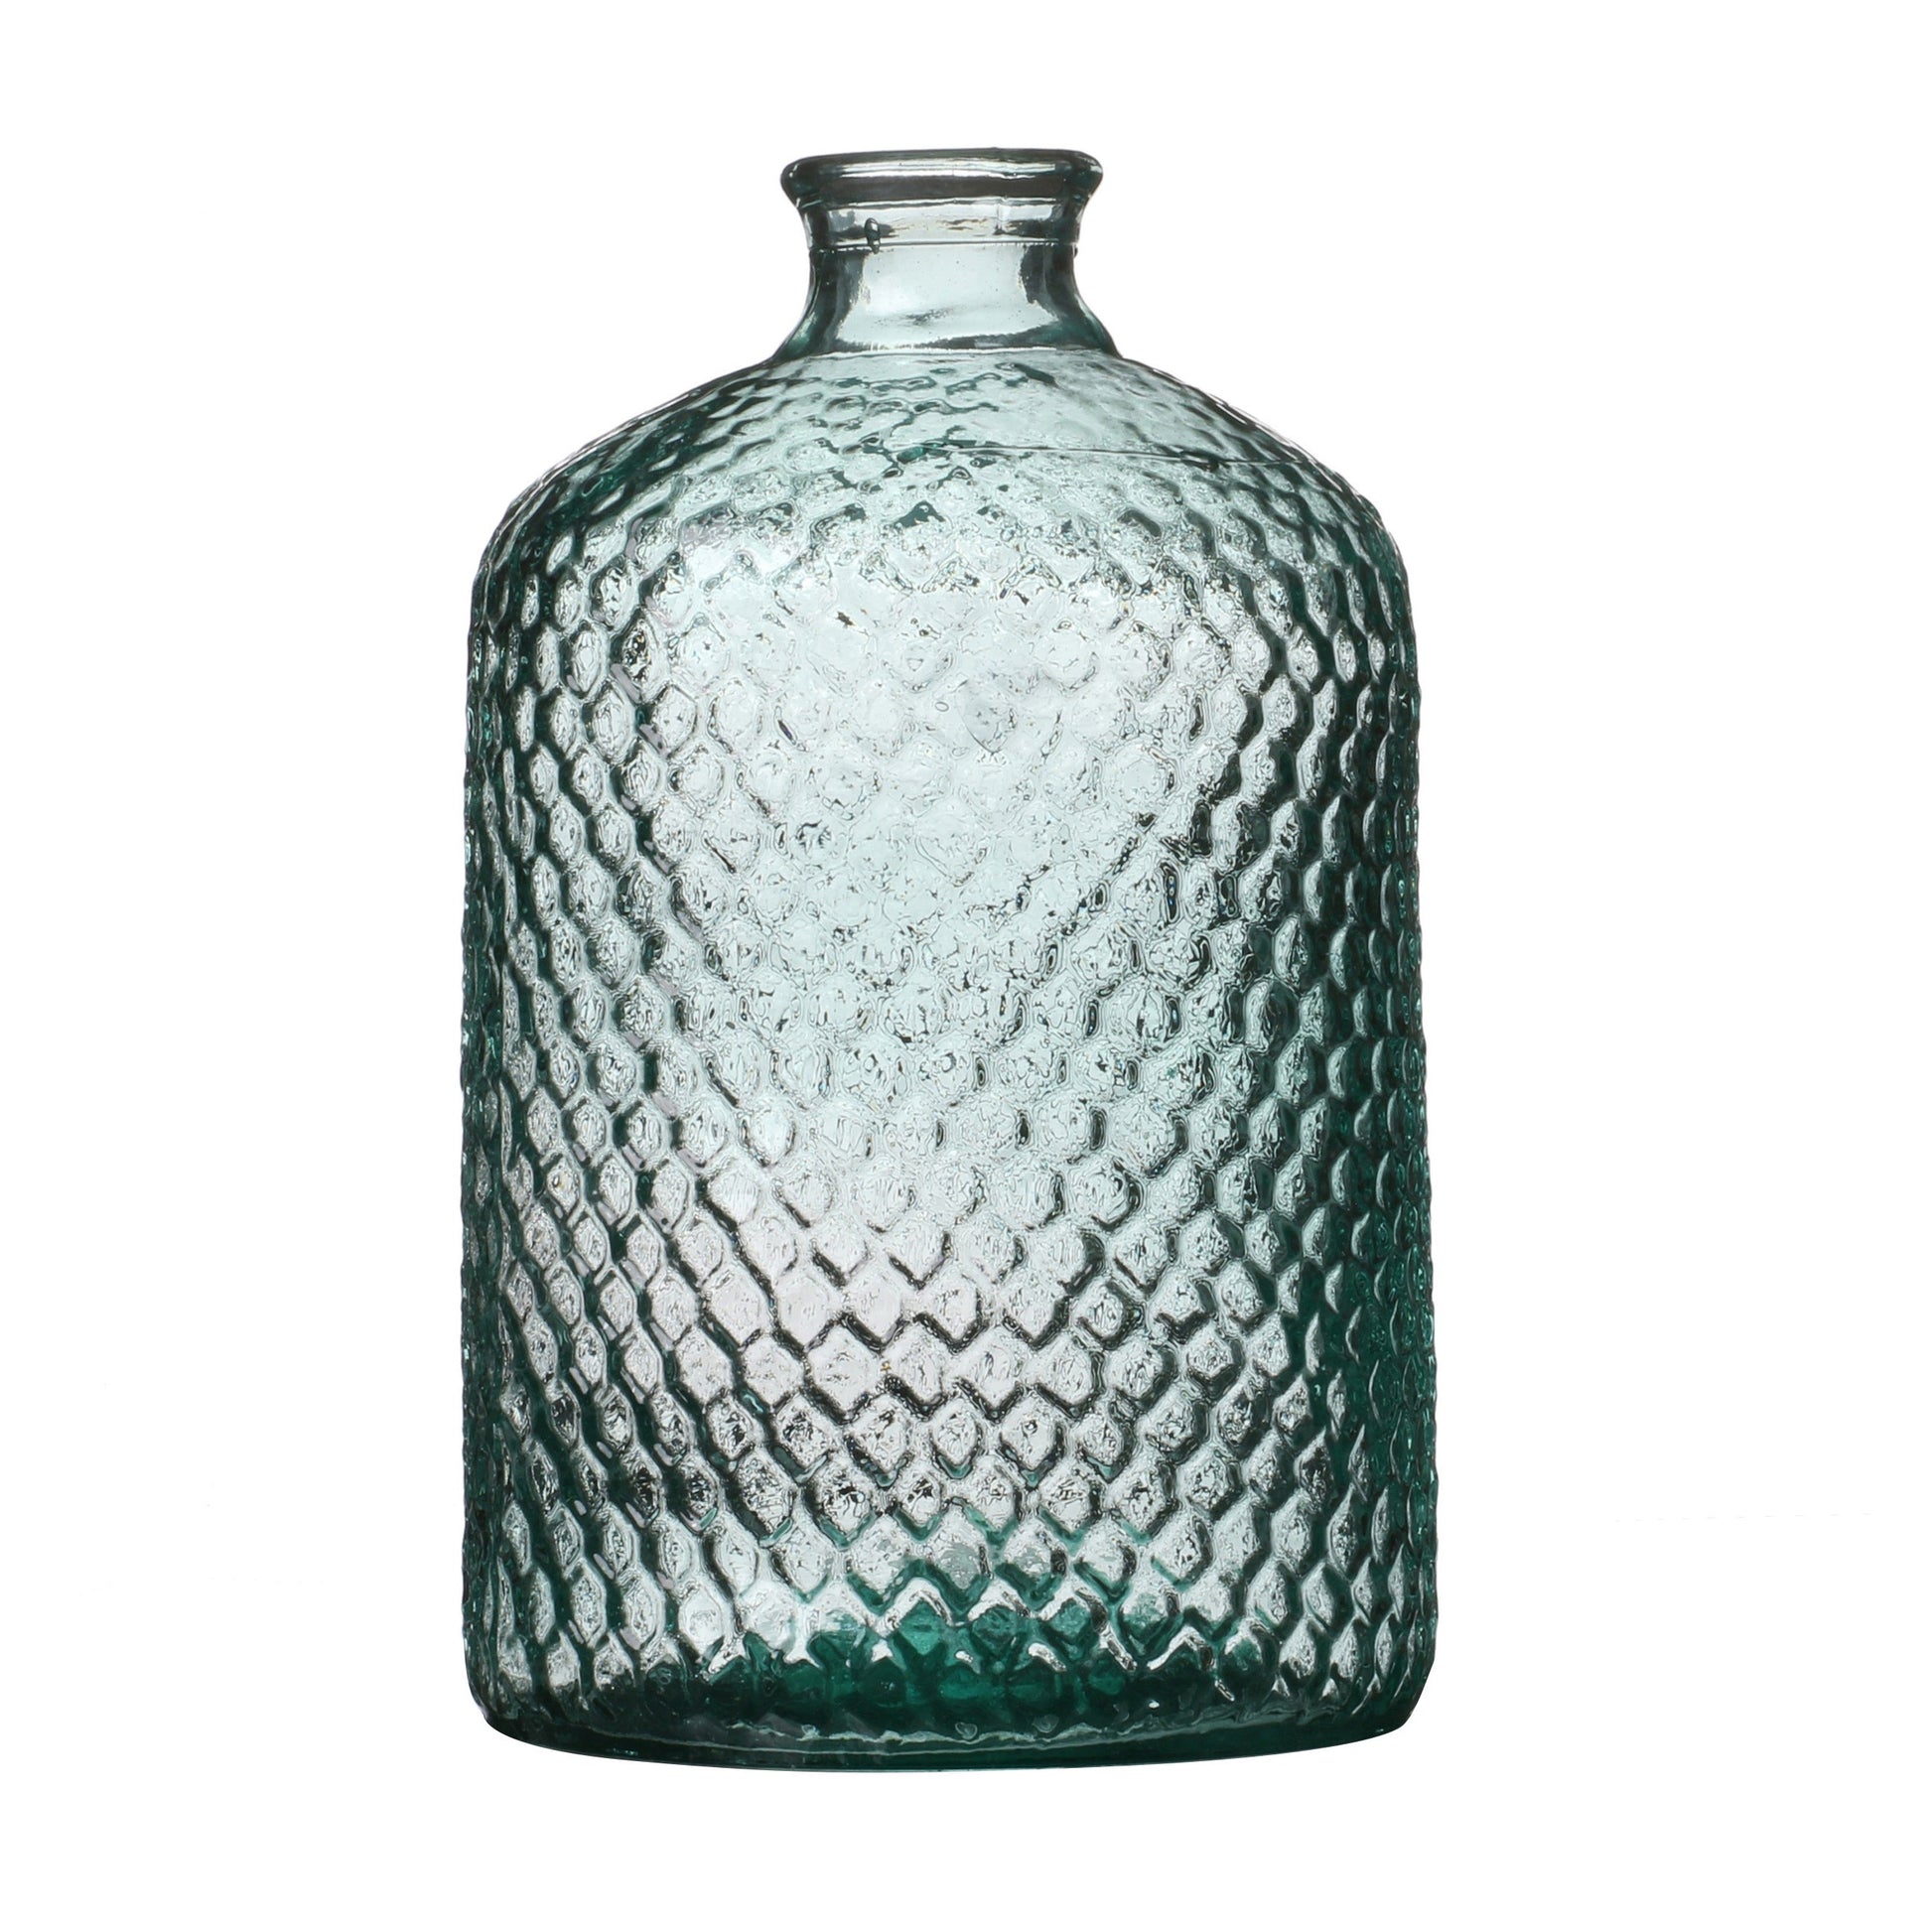 31cm Large Retro Recycled Glass Blue Bud Neck Table Vase